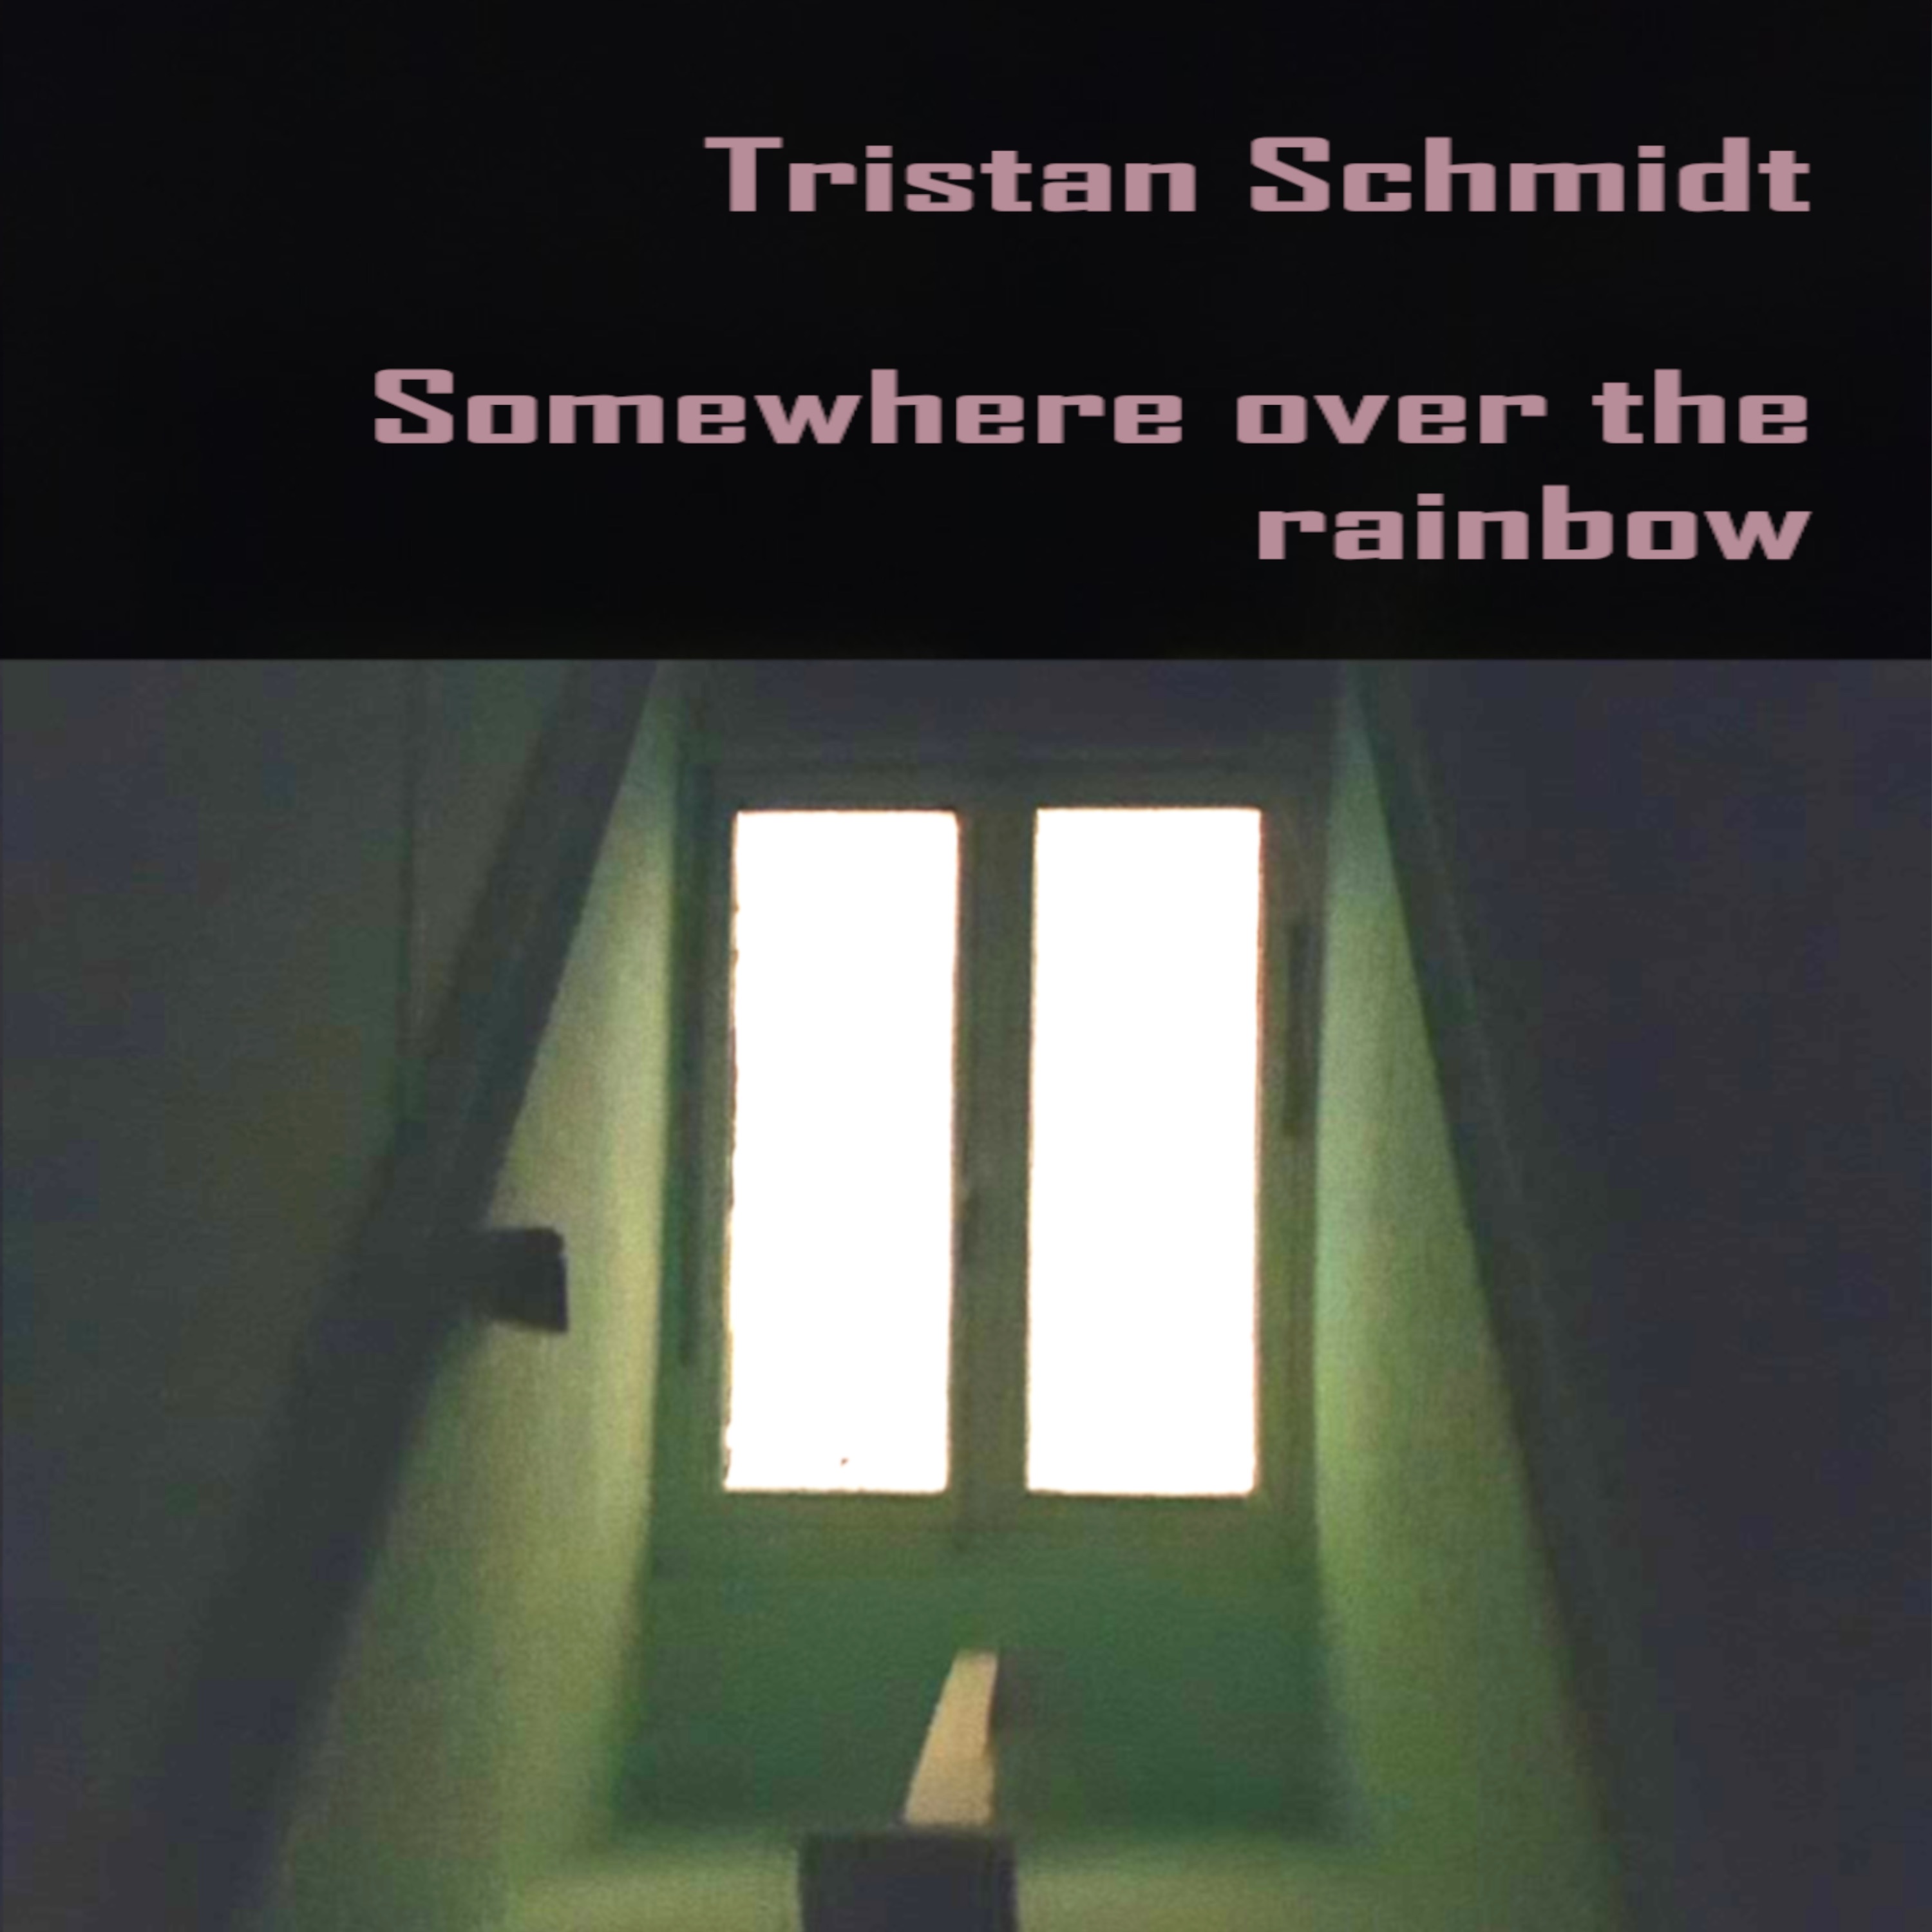 Somewhere over the rainbow (2019)